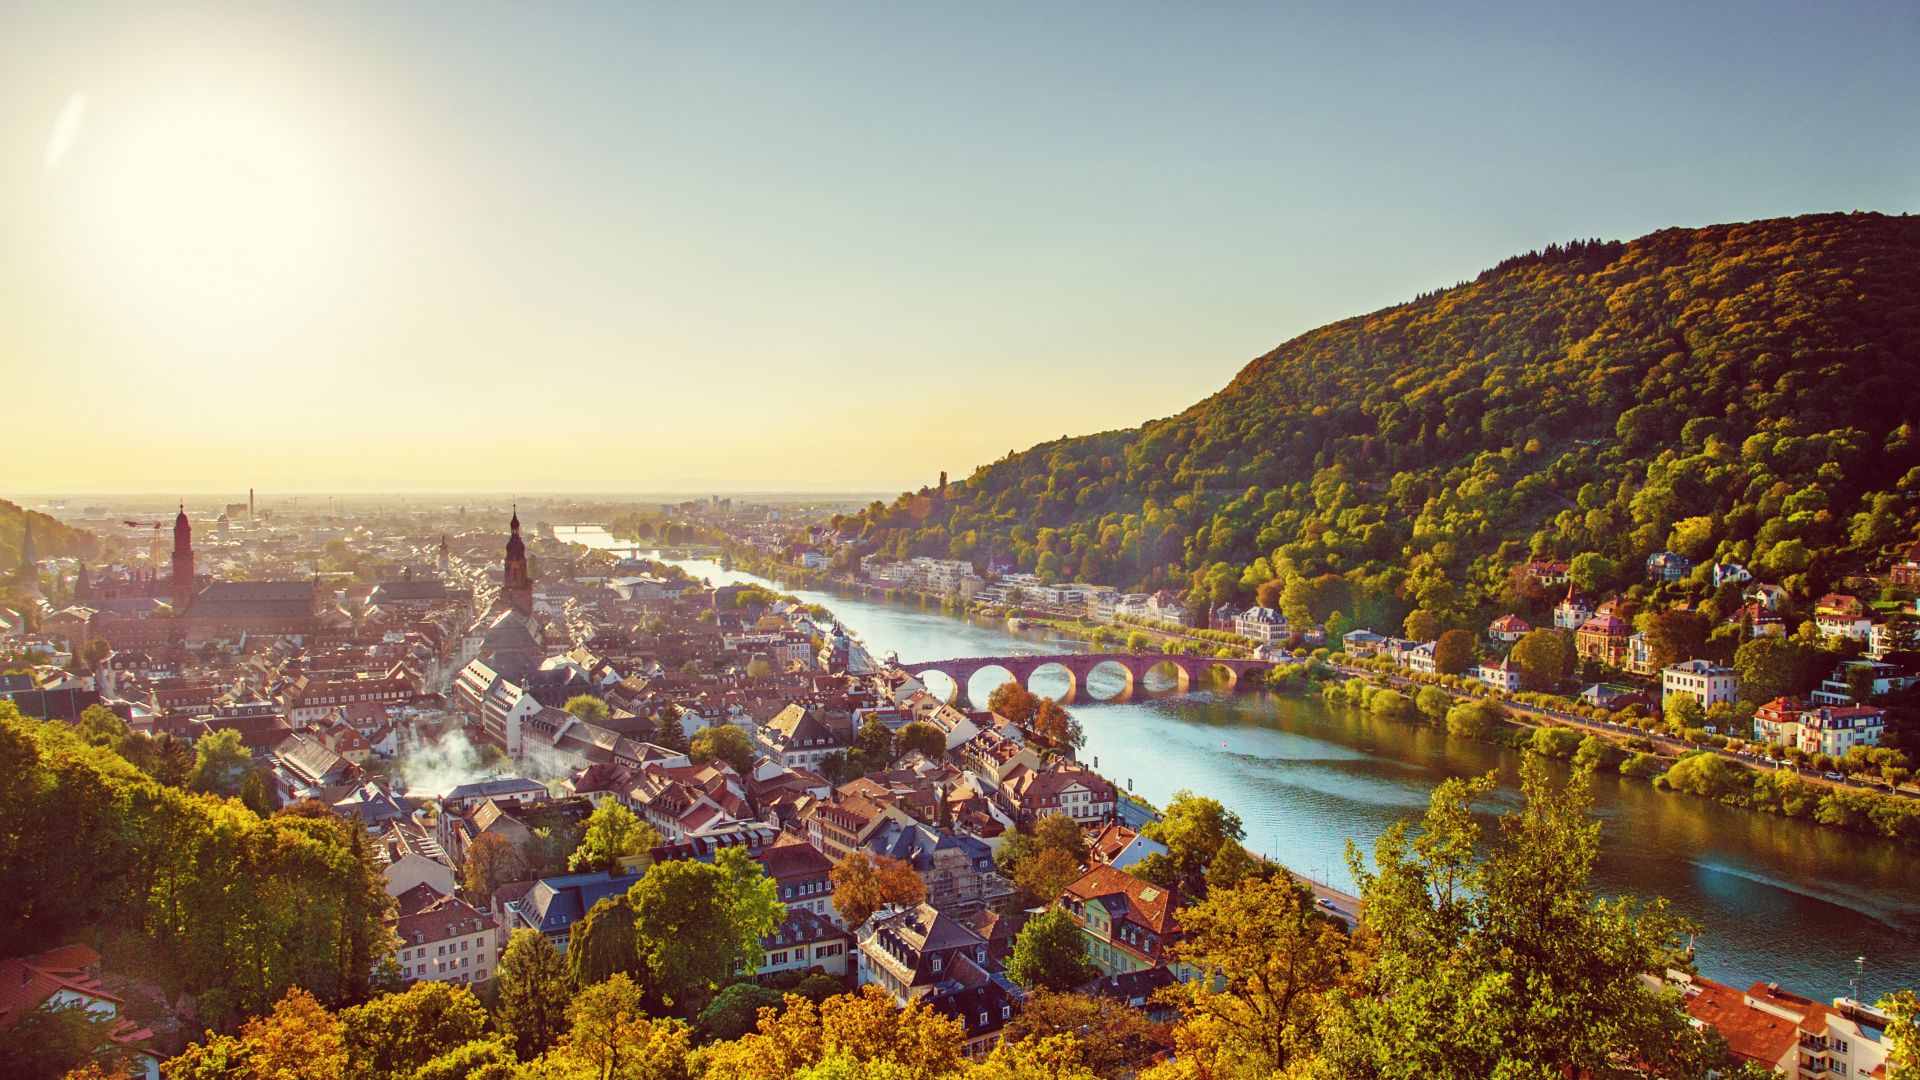 Heidelberg: View over the city and the river Neckar